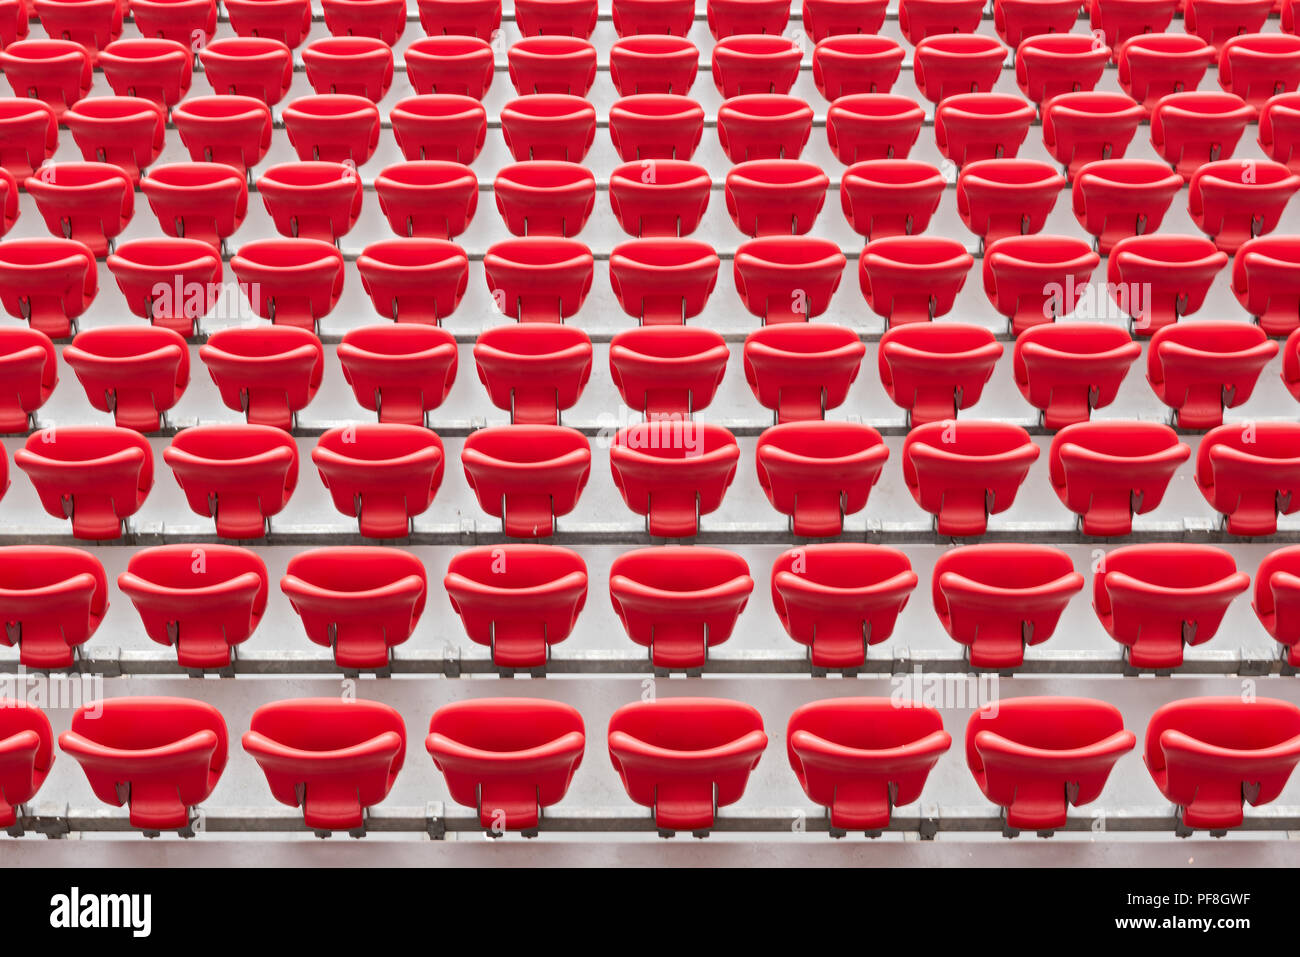 the red Stadium seats. Stock Photo